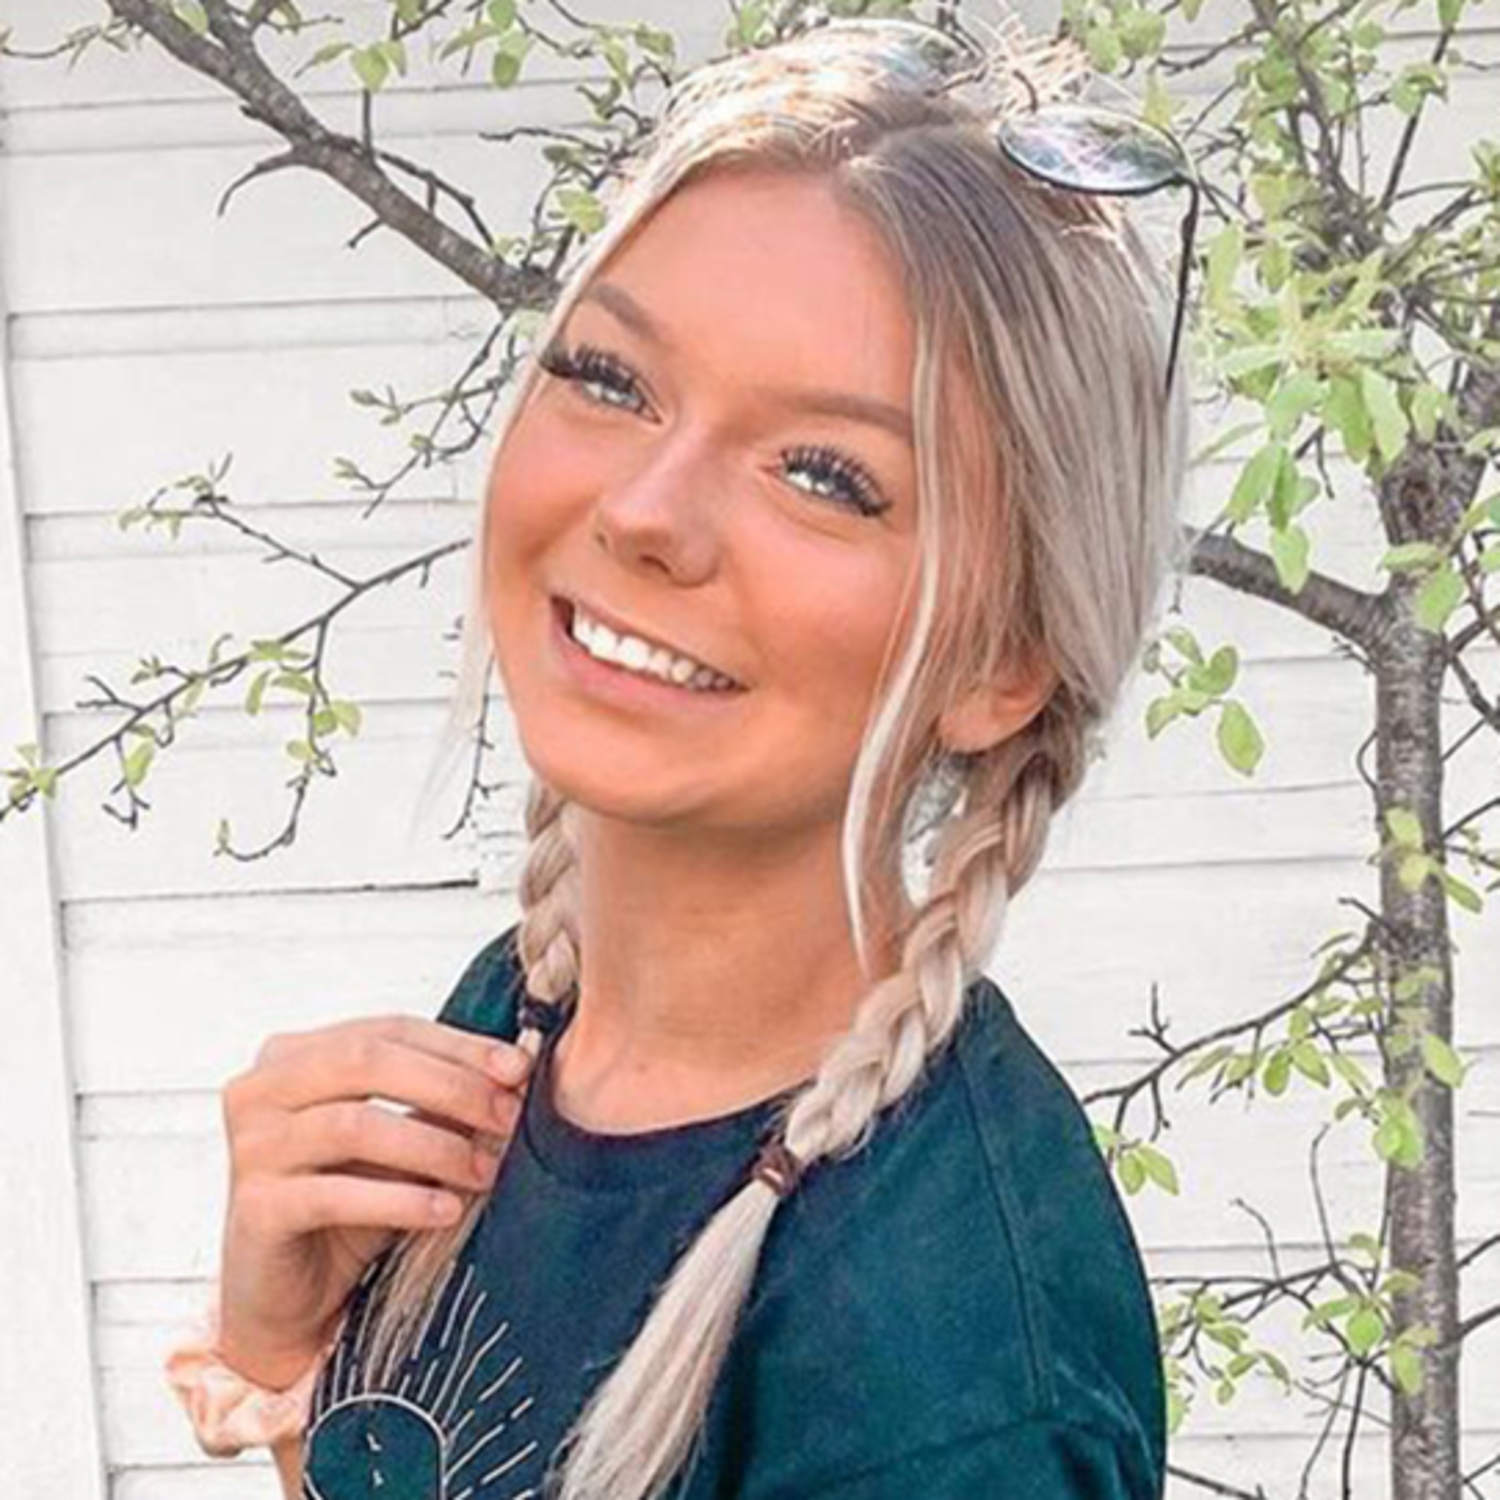 Ex-roommate reveals final text sent to Idaho slayings victim Madison Mogen